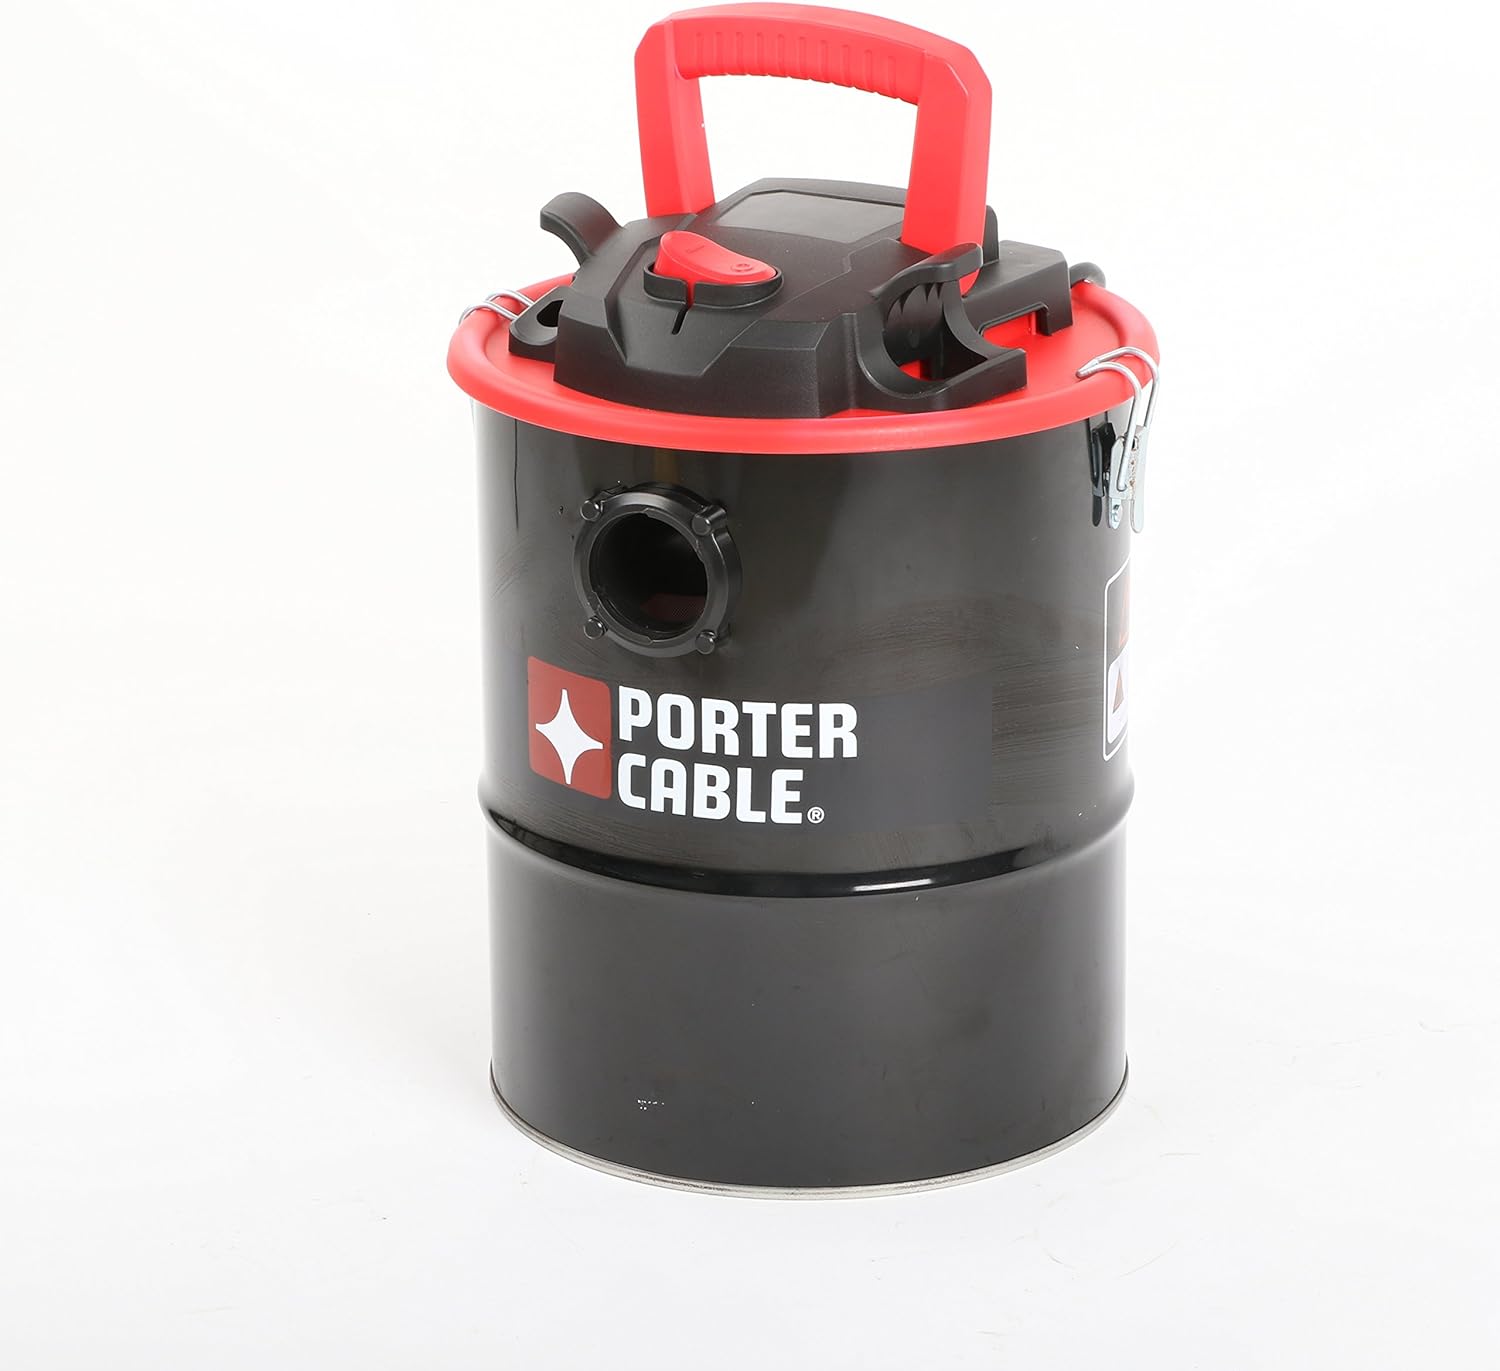 PORTER-CABLE 4 Gallon Ash Vac, Black Review